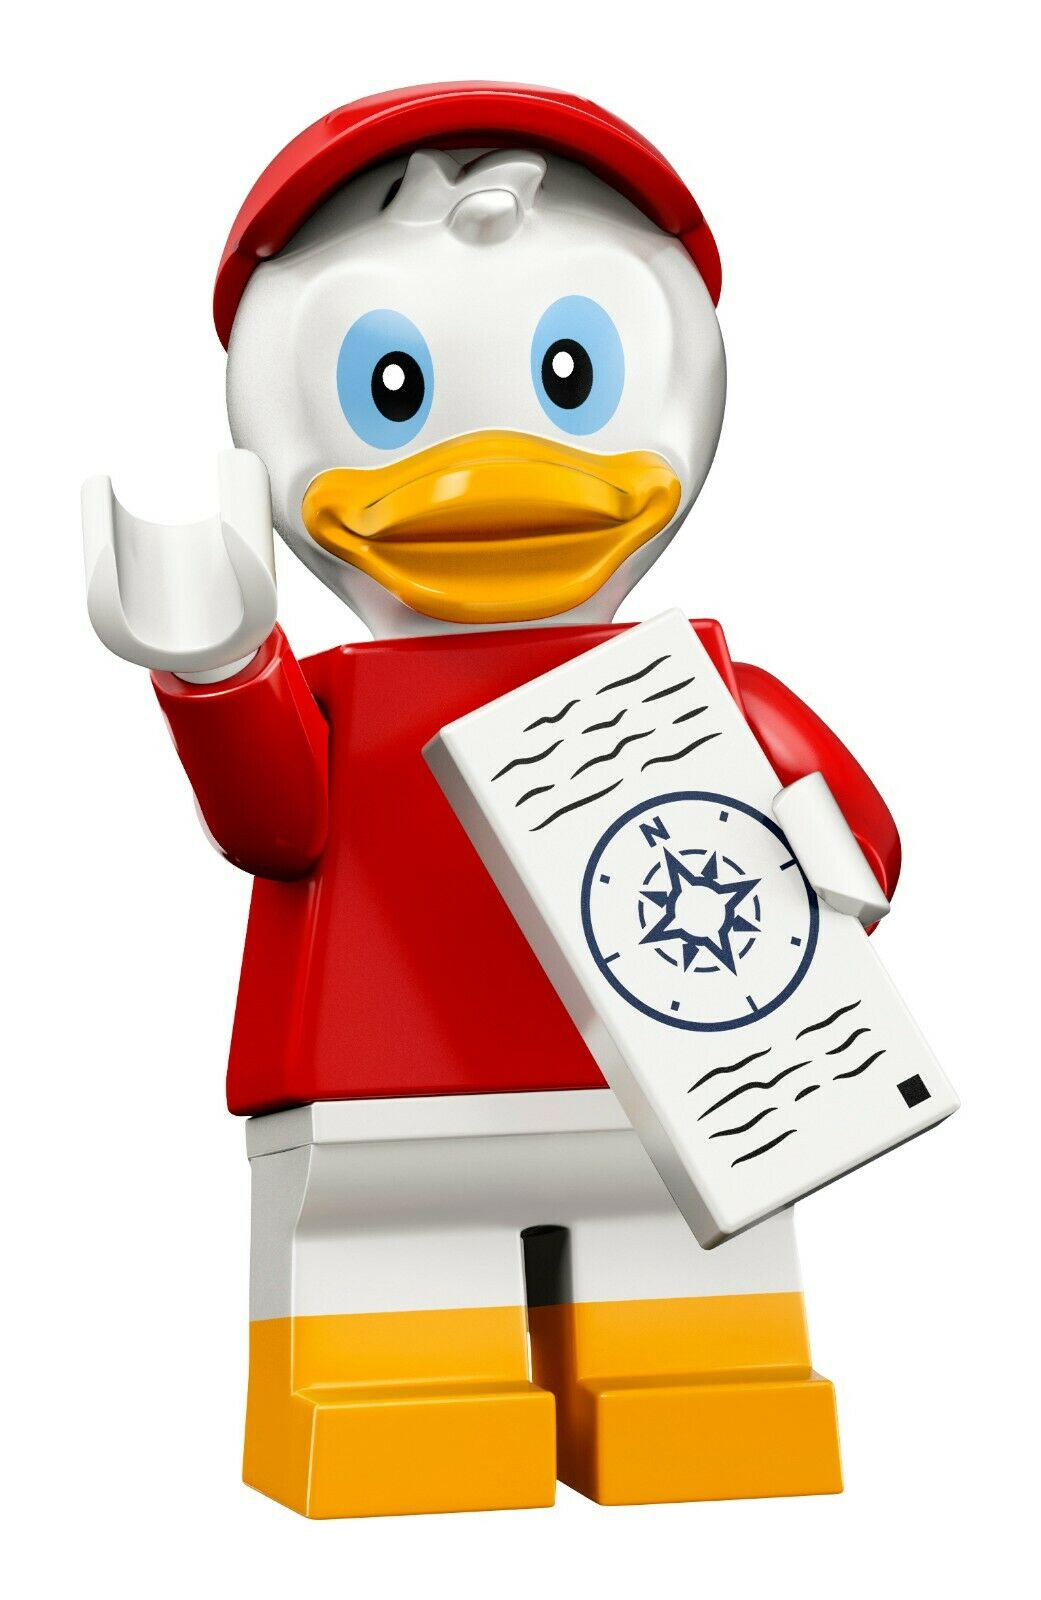 LEGO 71024 Minifigures Disney Series 2 - Huey (DuckTales)